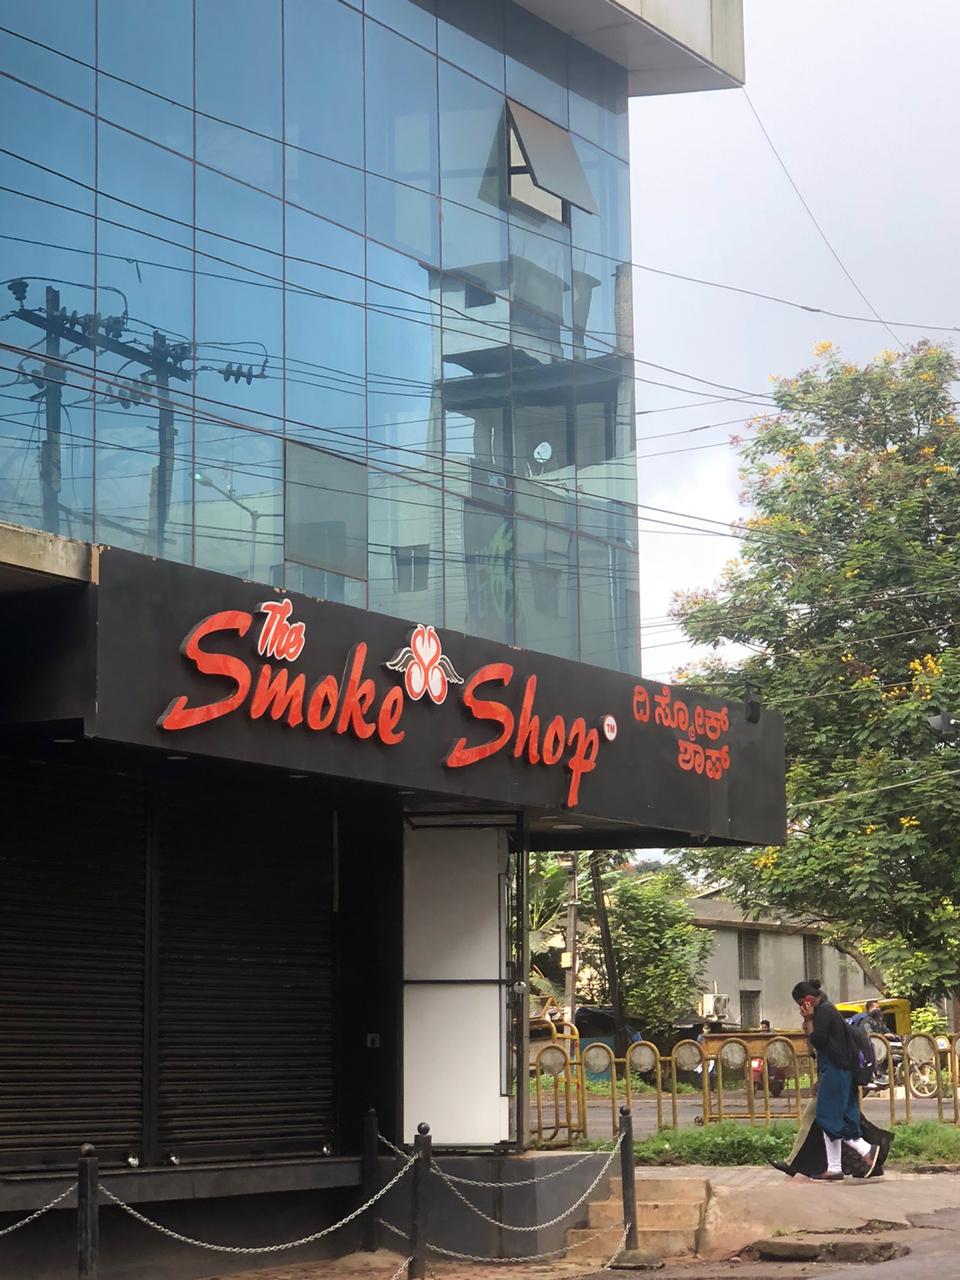 Smook shop